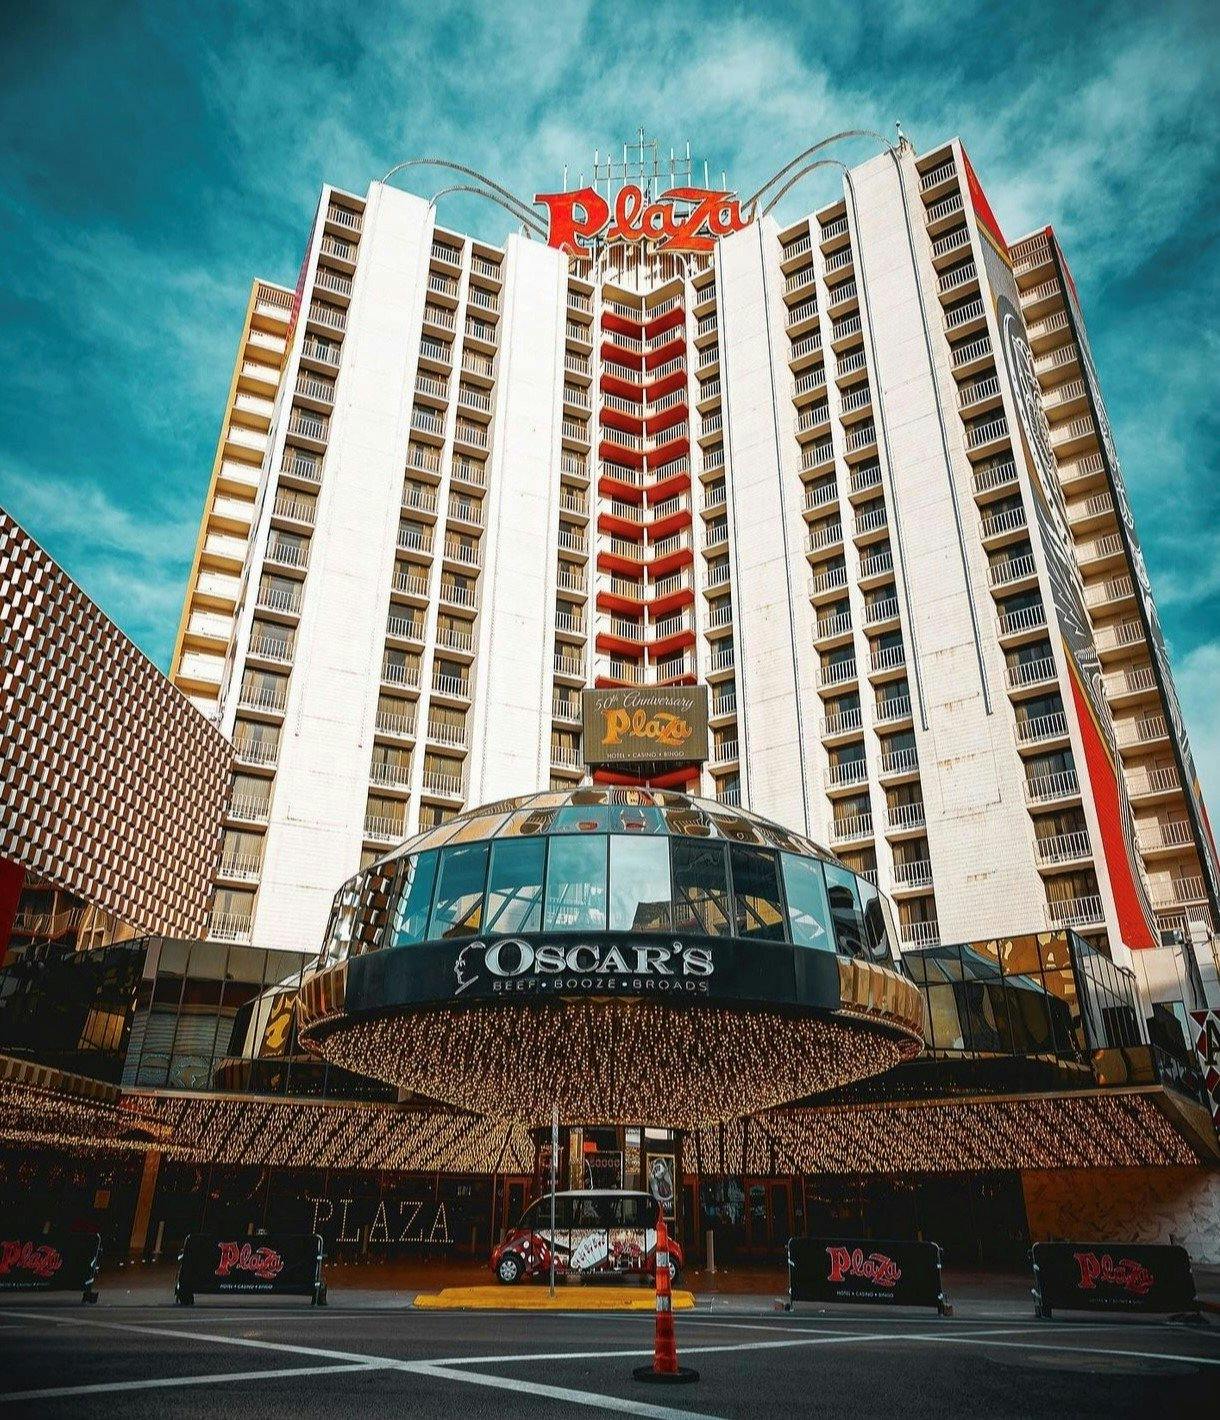 Image 4 of 6 of Plaza Hotel & Casino court